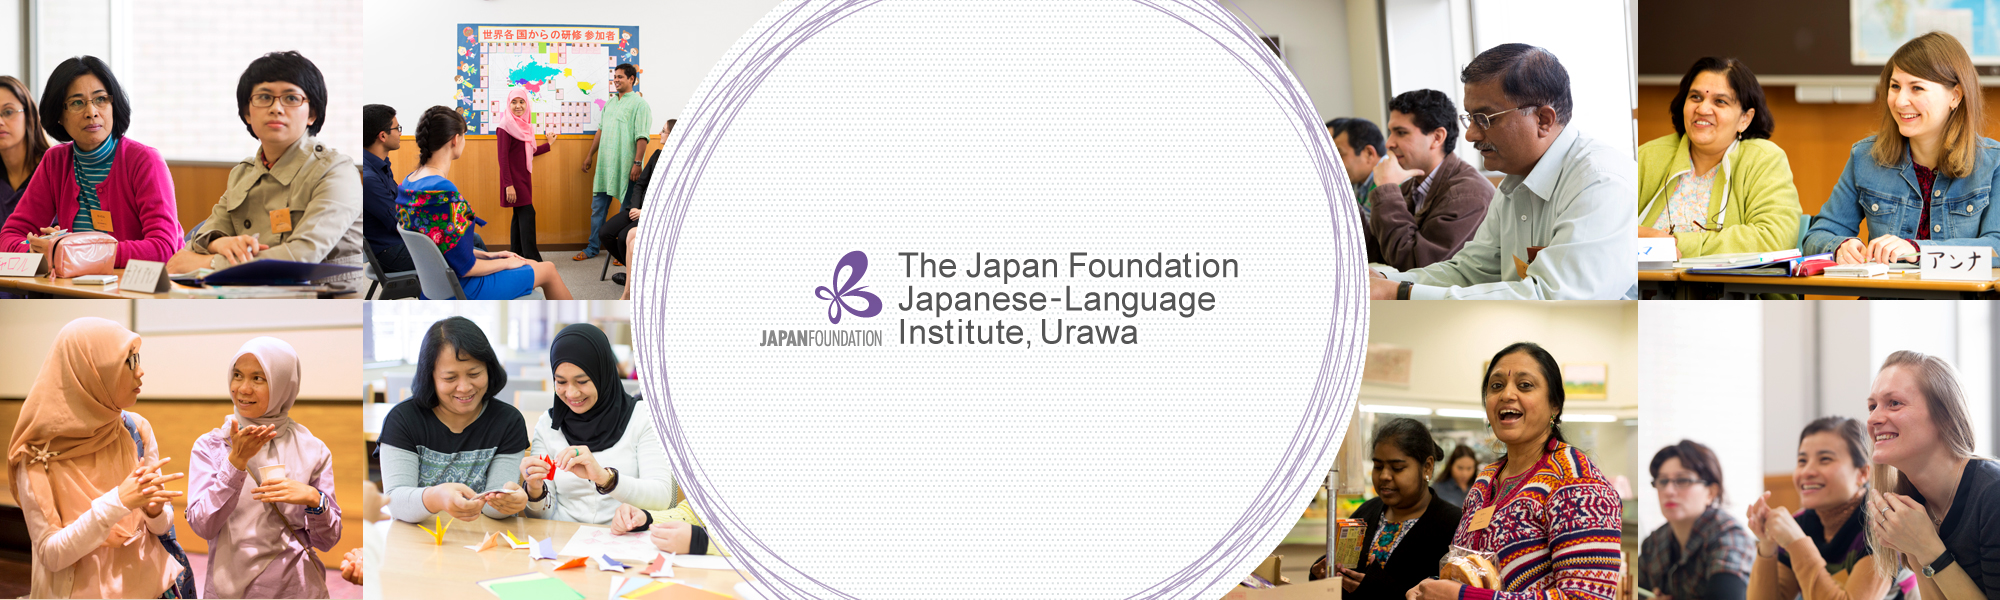 The Japan Foudation Japanese-Language Institute, Urawa